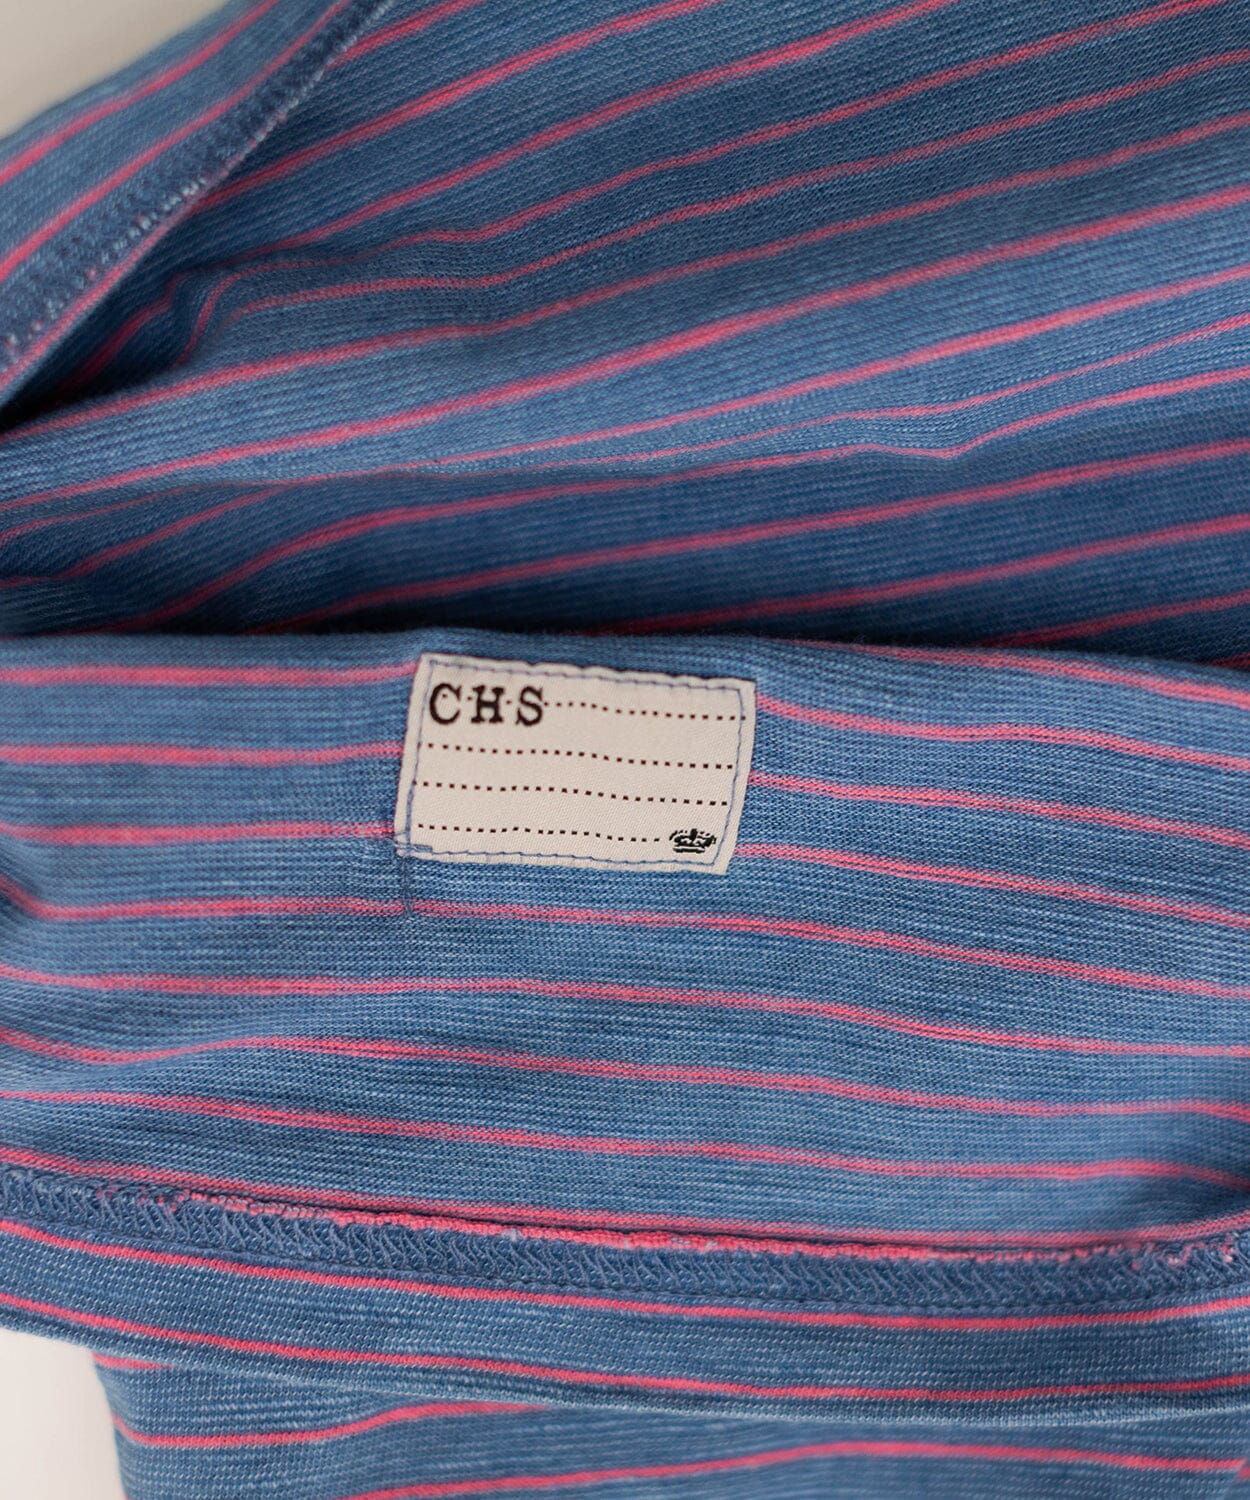 mens indigo blue cotton striped polo shirt by oobe brand